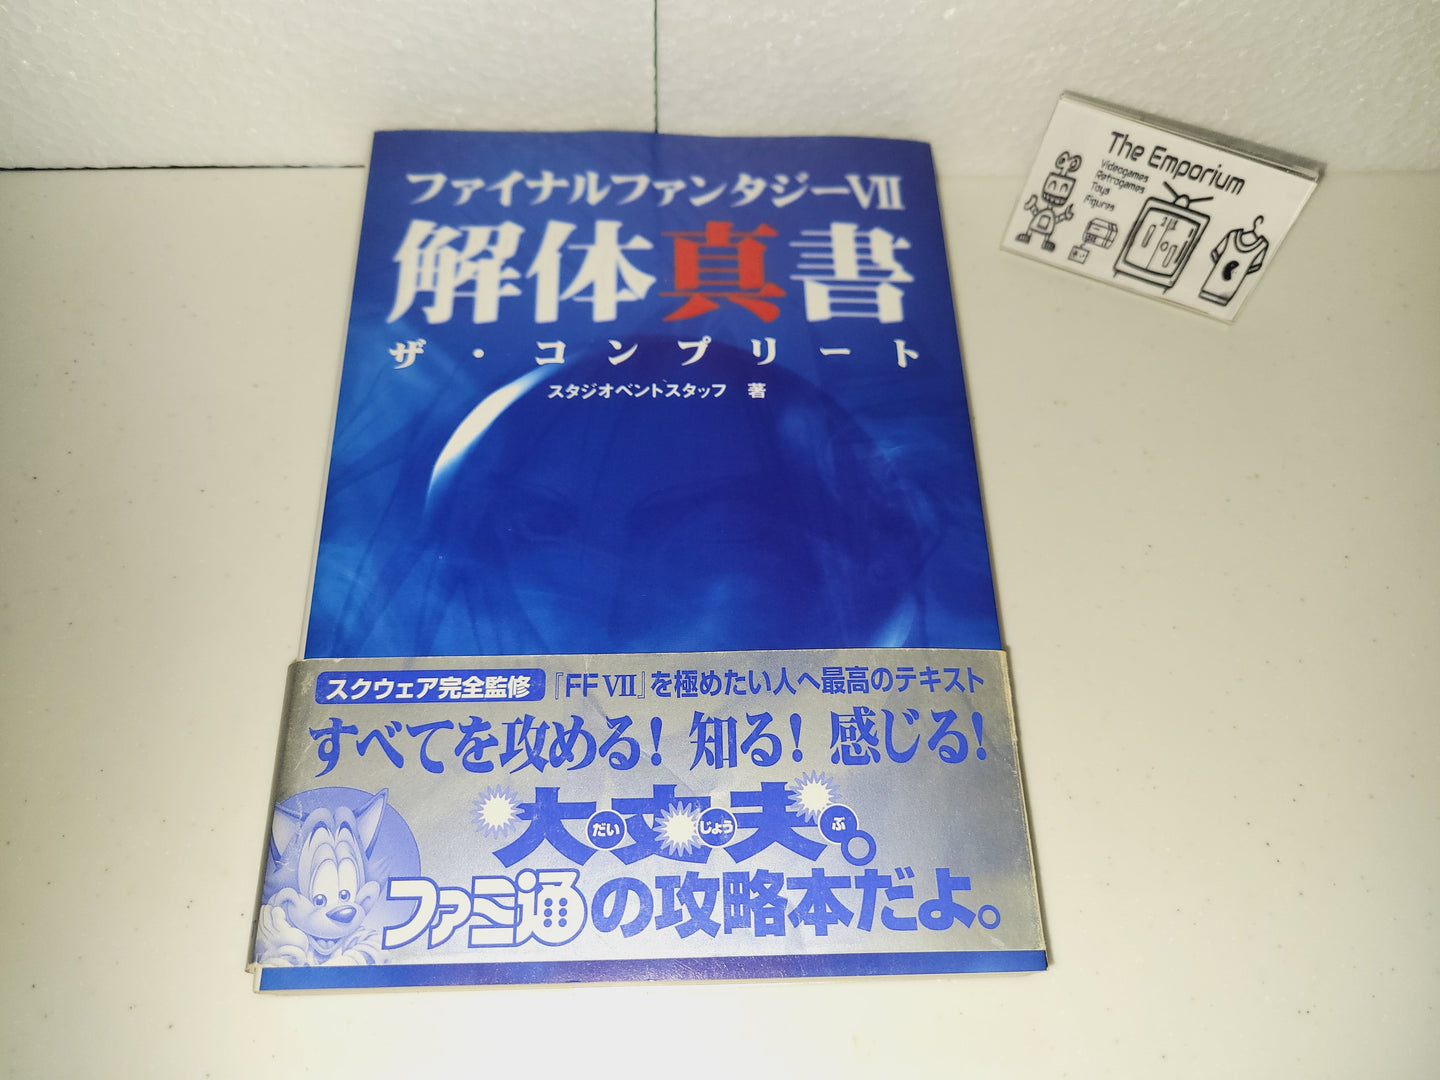 michela - Final Fantasy VII the complete -  guidebook  - book